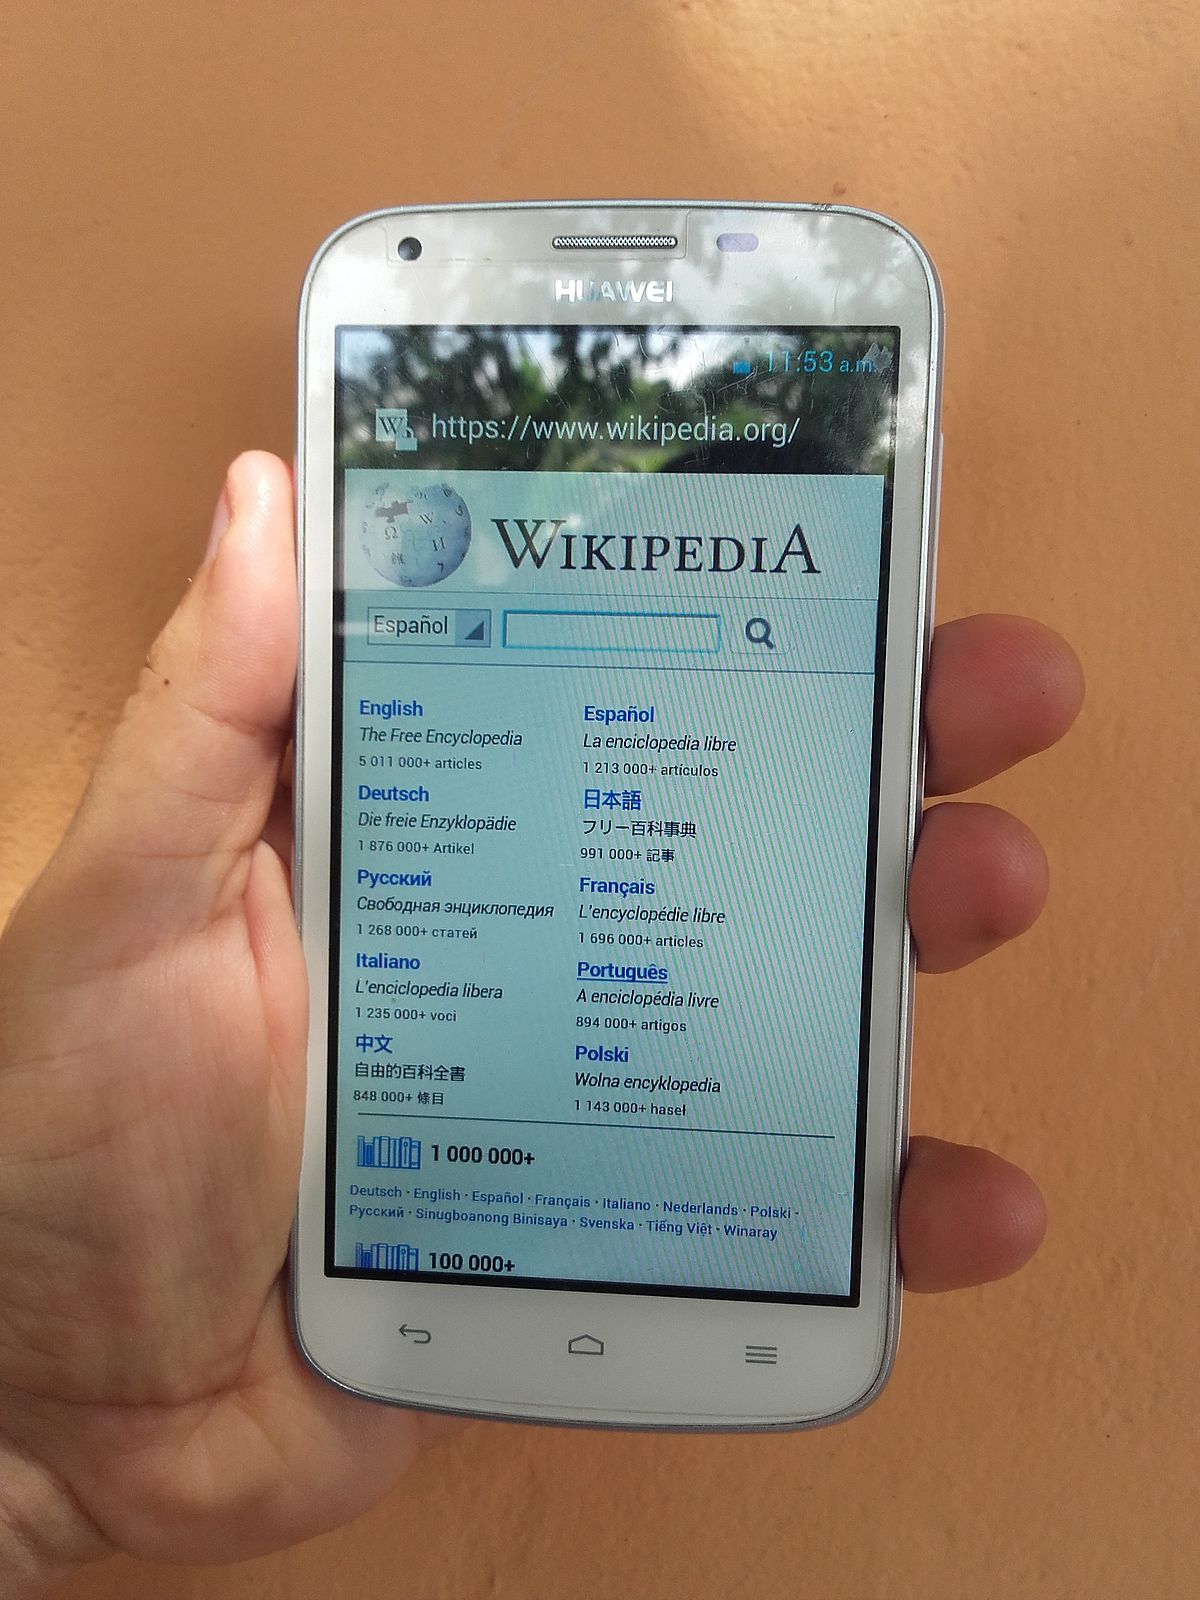 Teléfono inteligente - Wikipedia, la enciclopedia libre